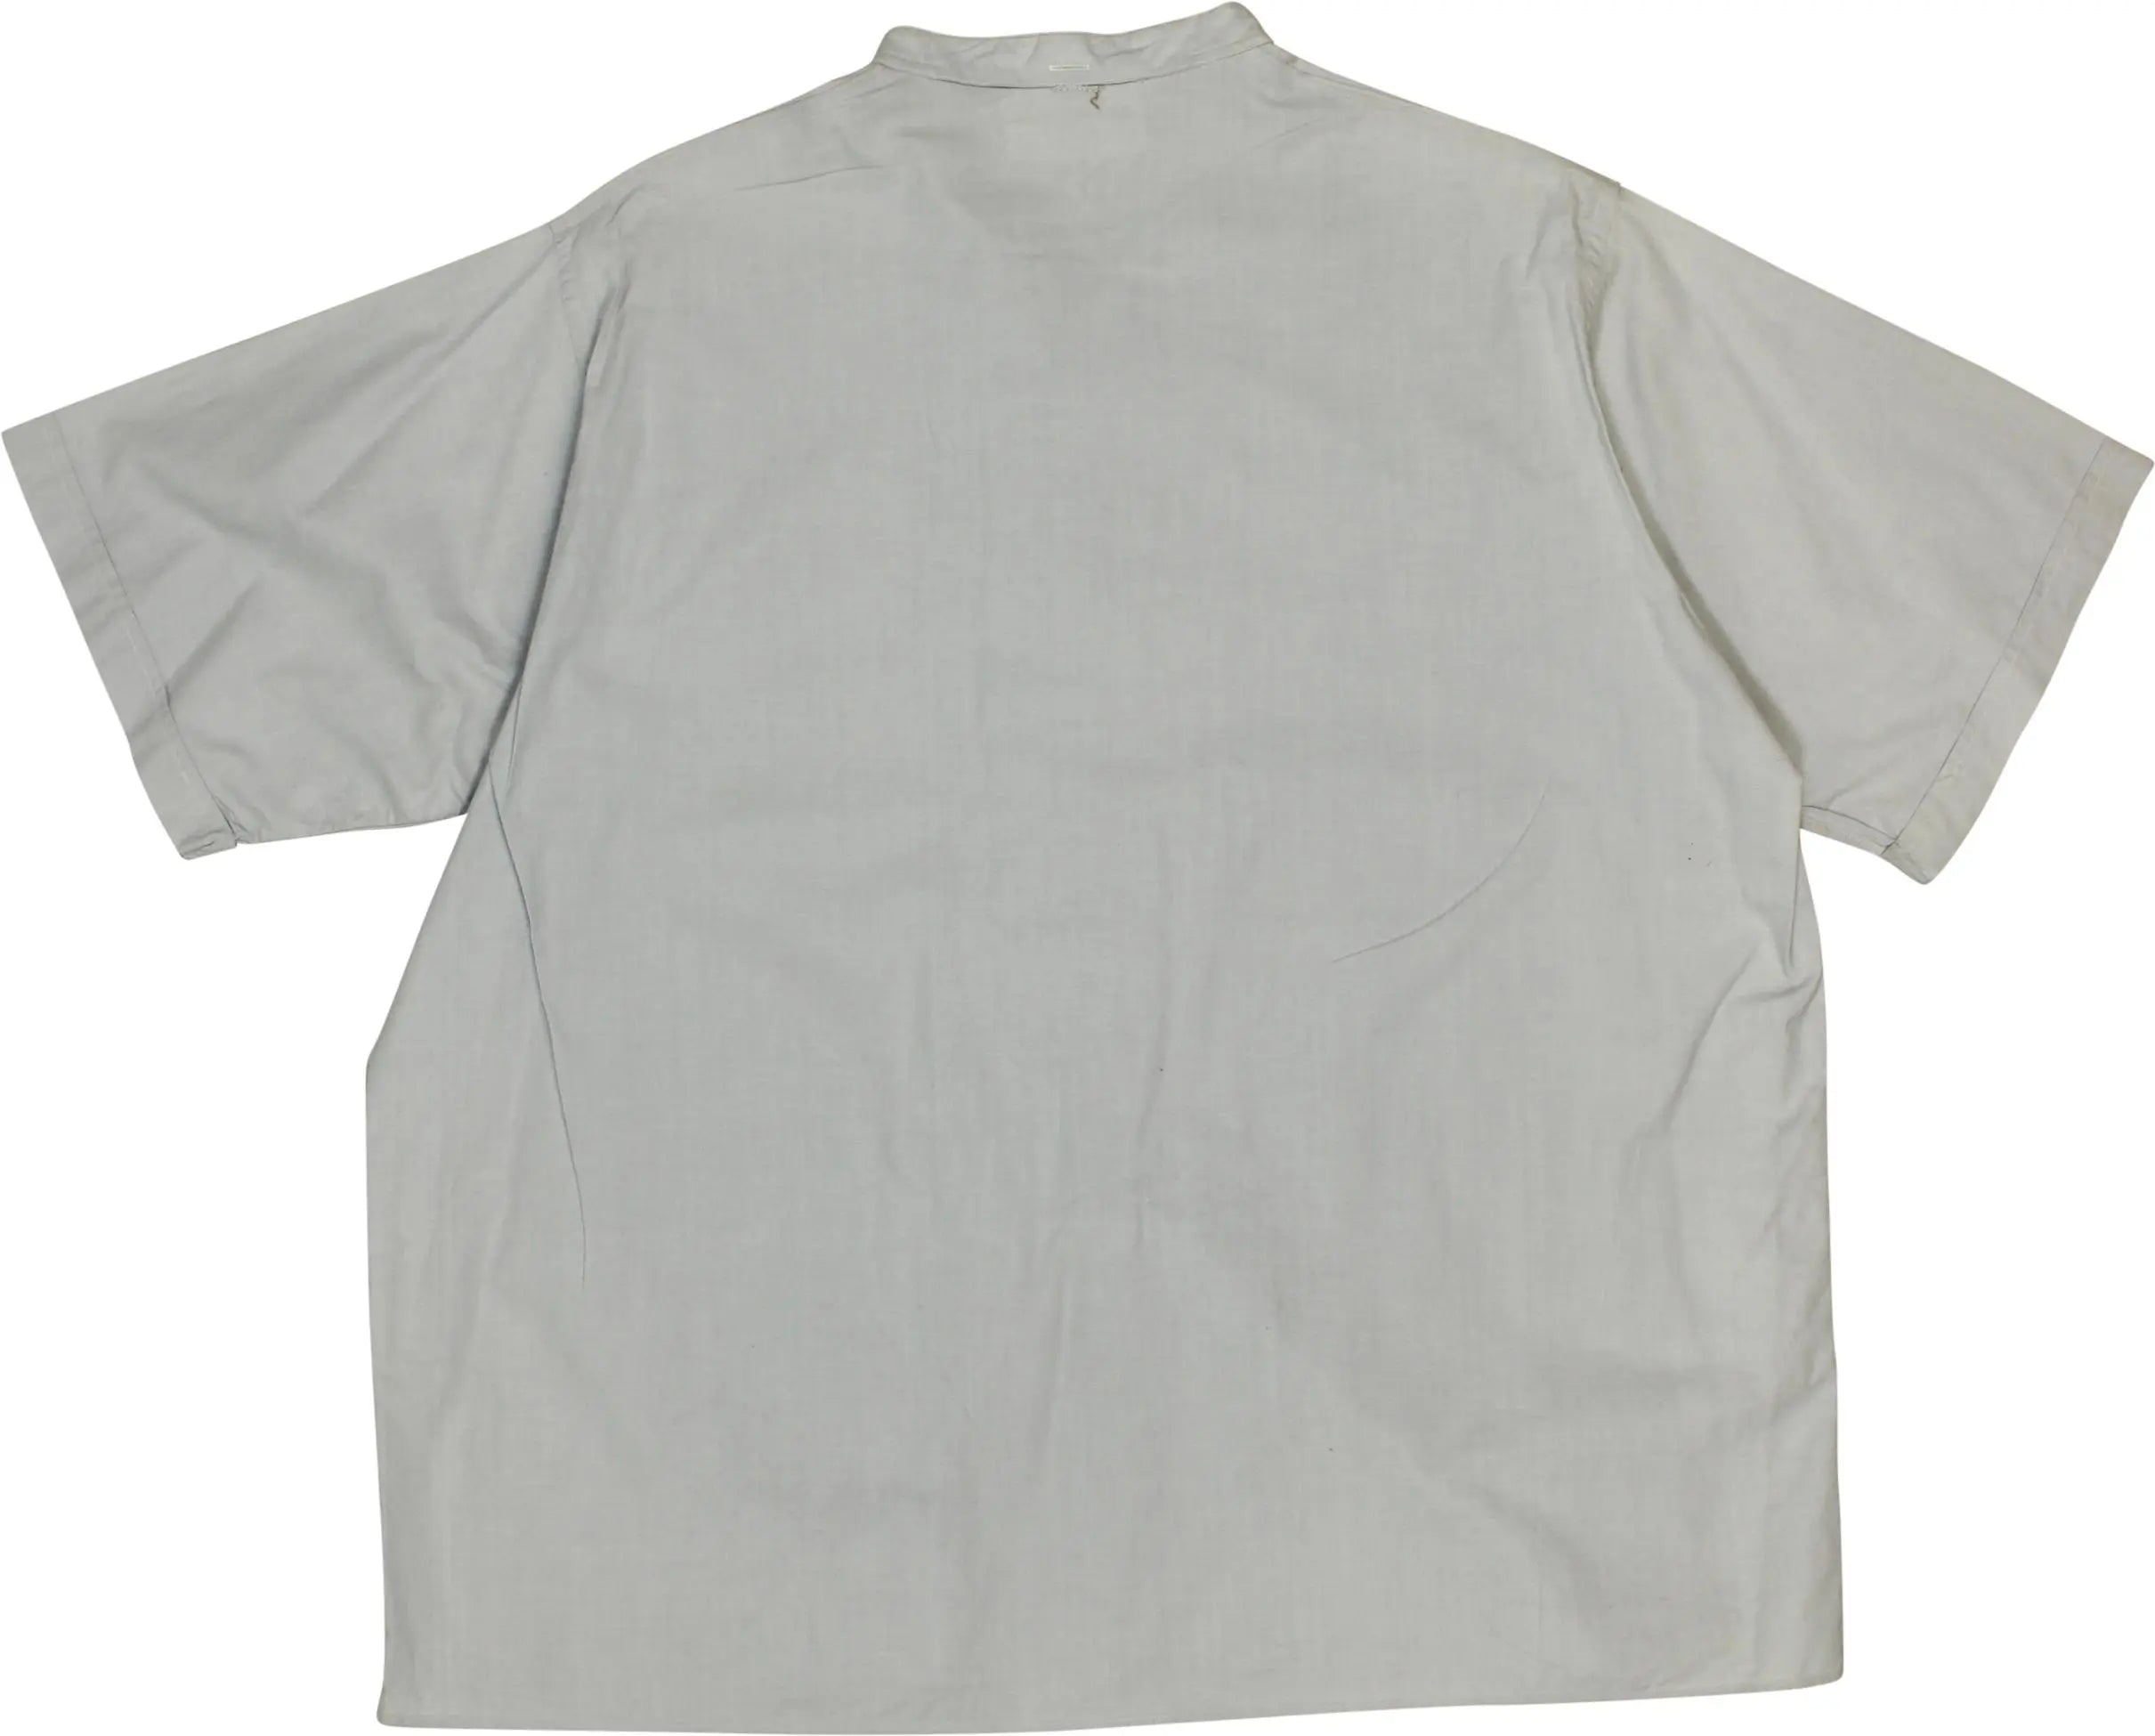 Handmade - Handmade Short Sleeve Shirt- ThriftTale.com - Vintage and second handclothing